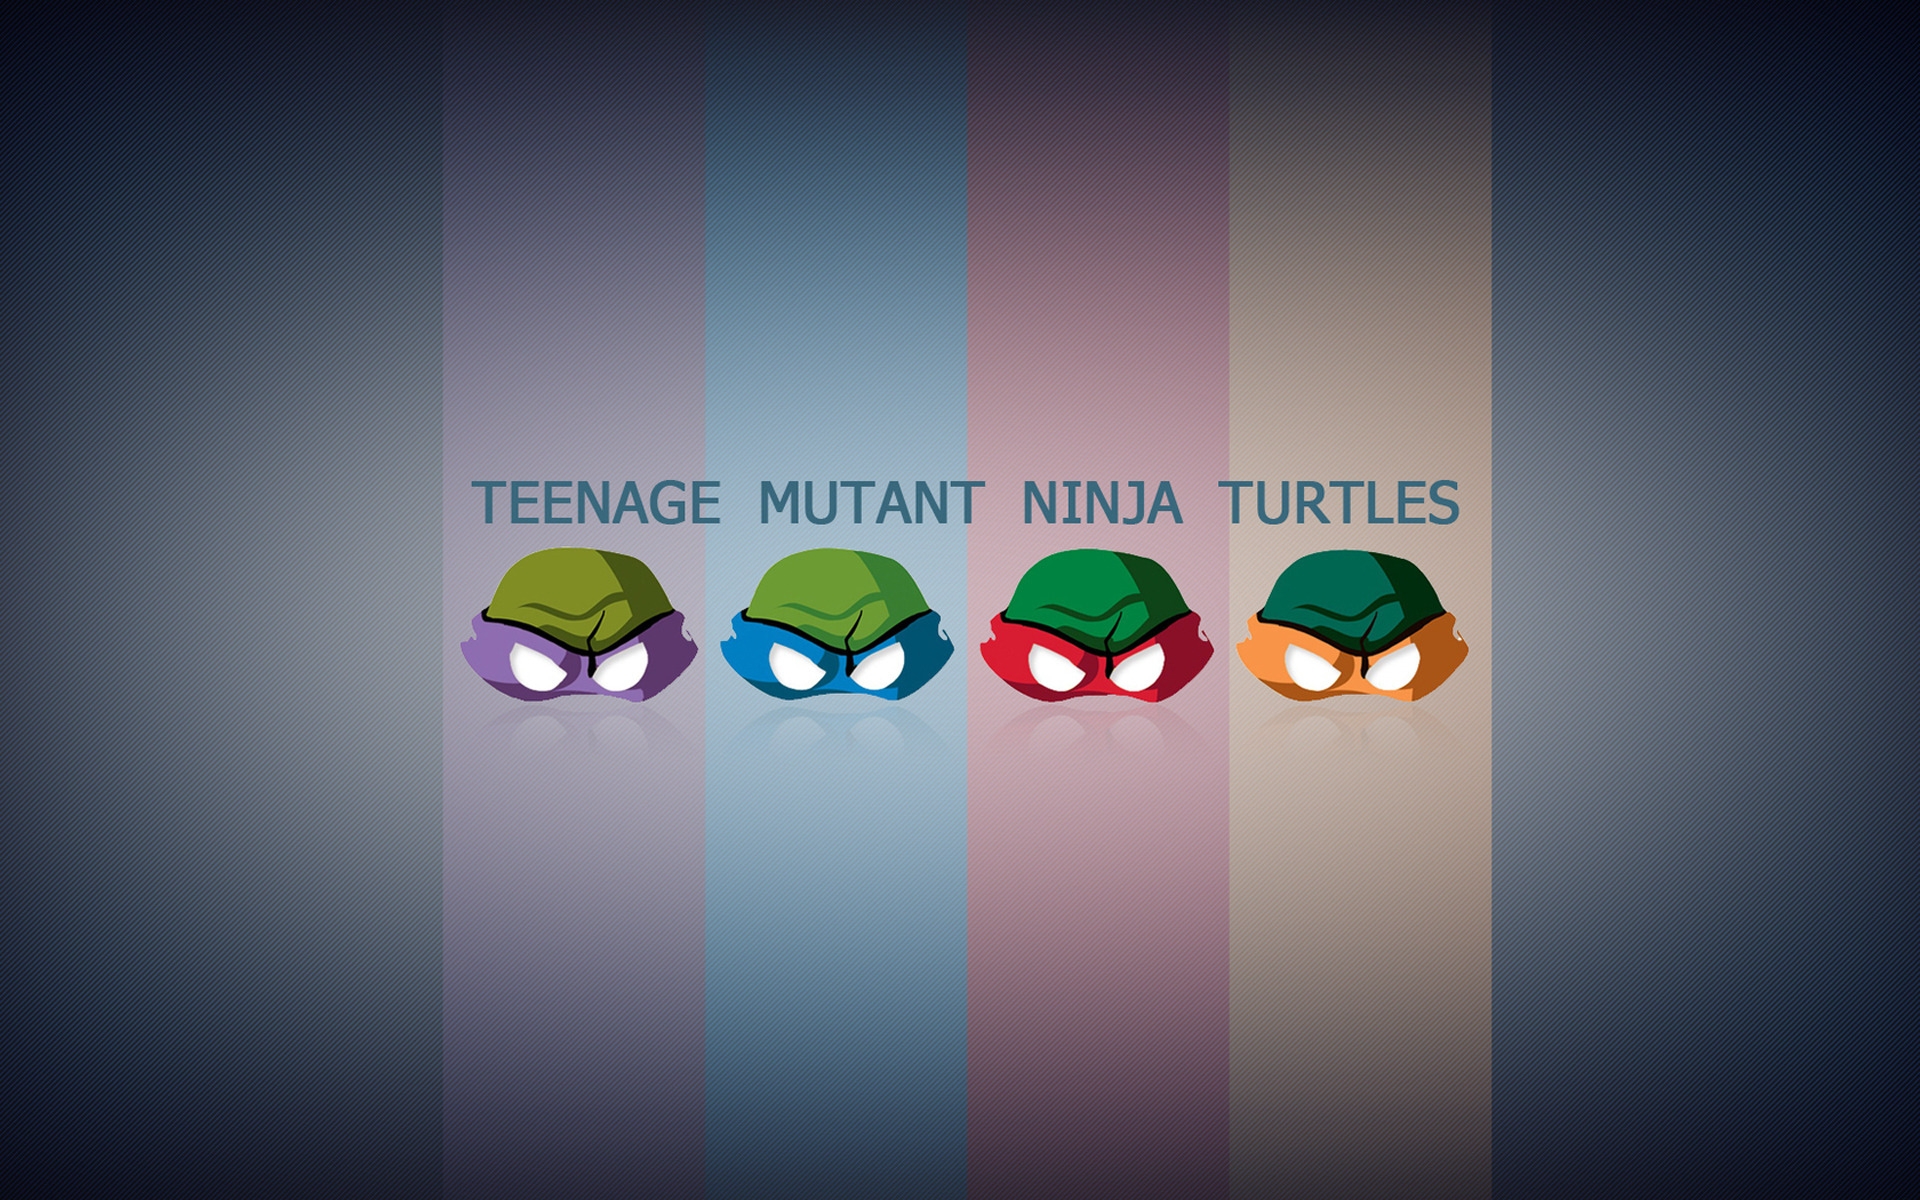 Teengae Mutant Ninja Turtles for 1920 x 1200 widescreen resolution